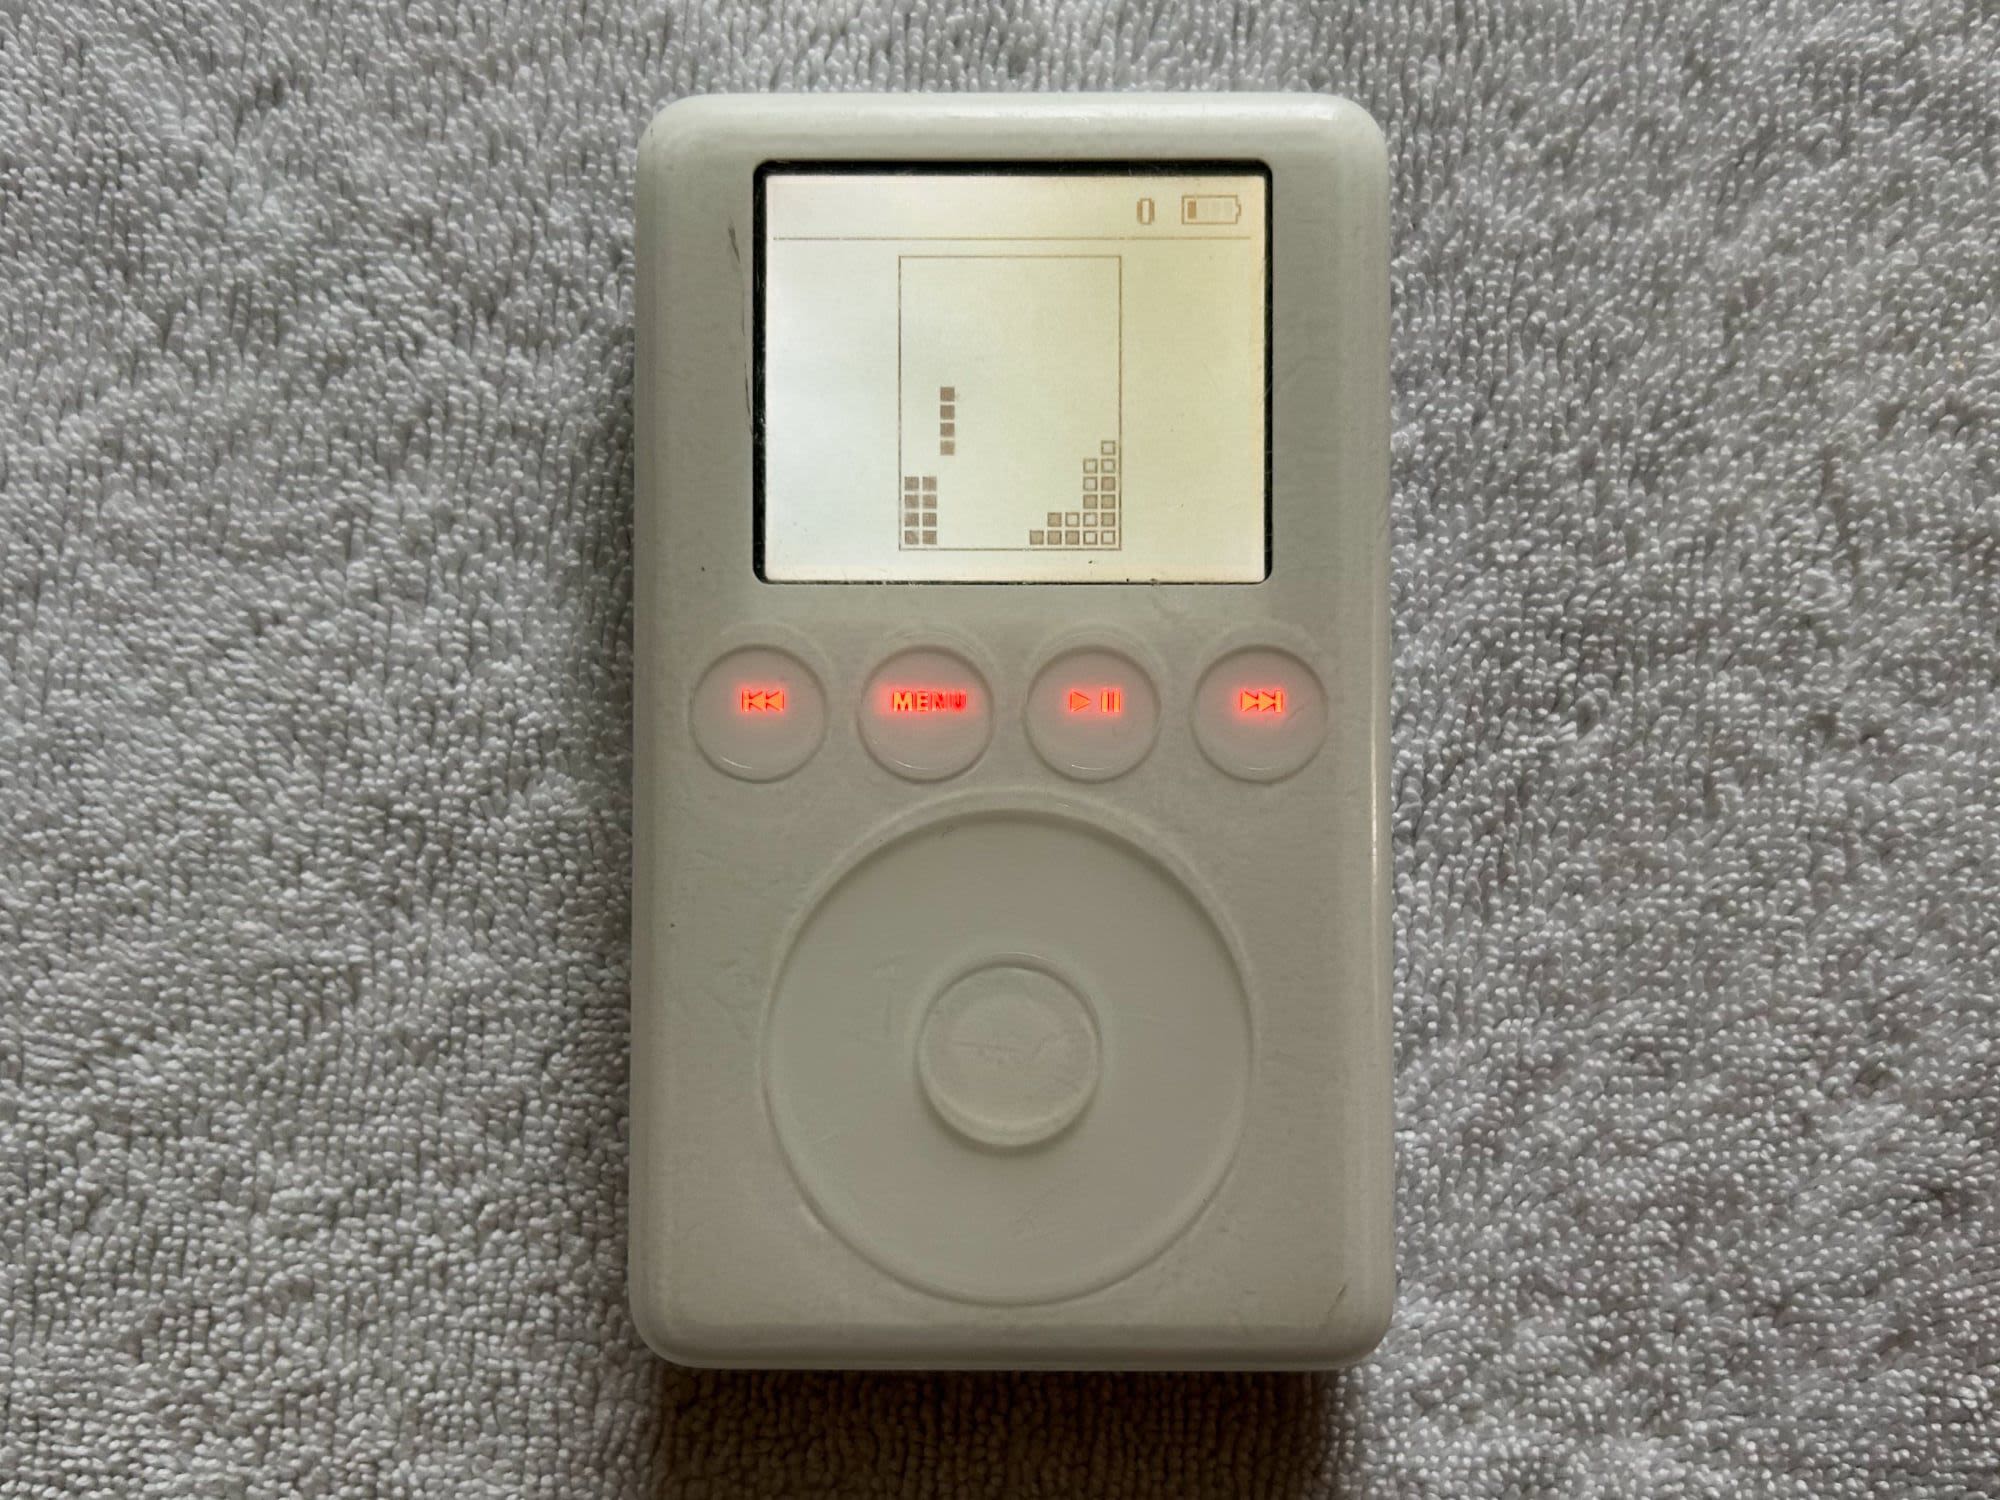 Prototype iPod Features Apple-Designed Tetris Clone Called 'Stacker'